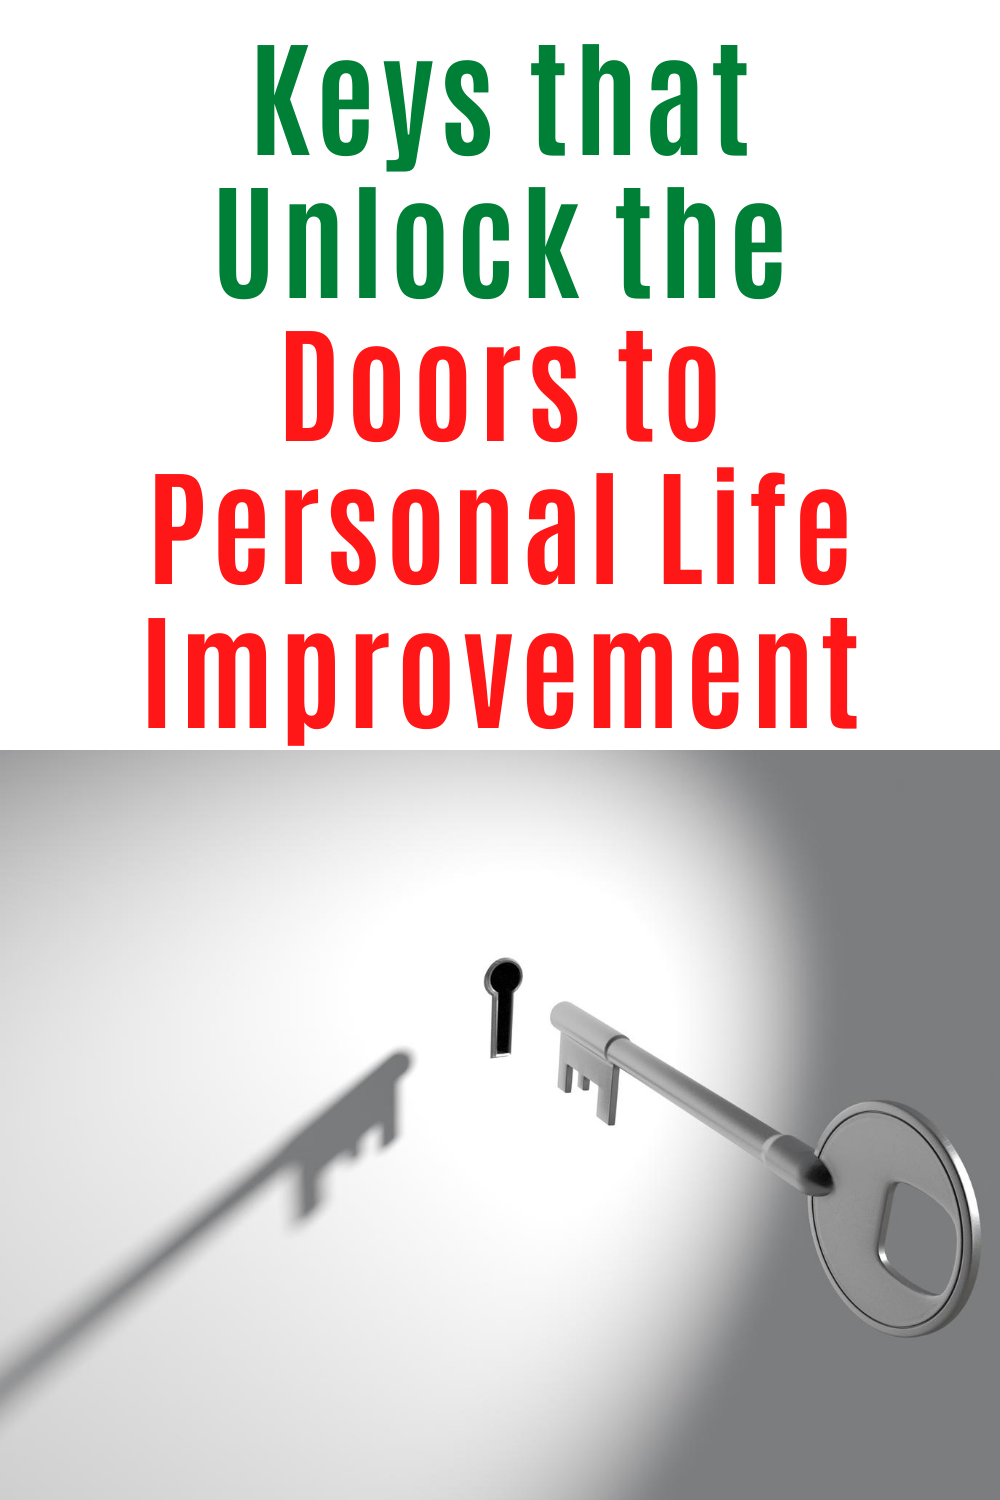 Keys that unlock the doors to personal life improvement